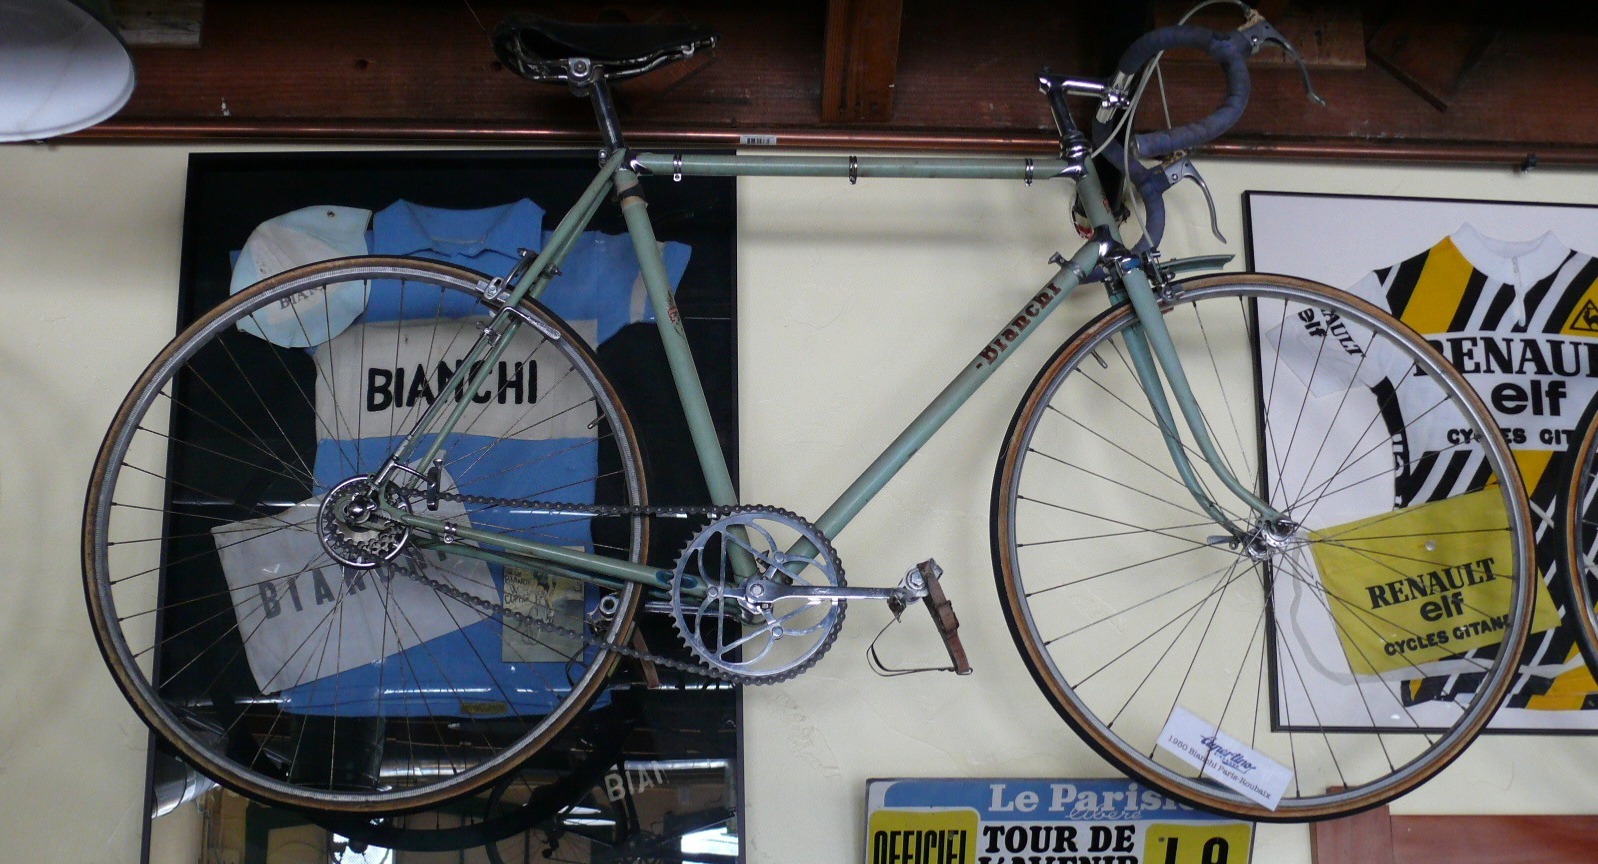 Restored Bianchi